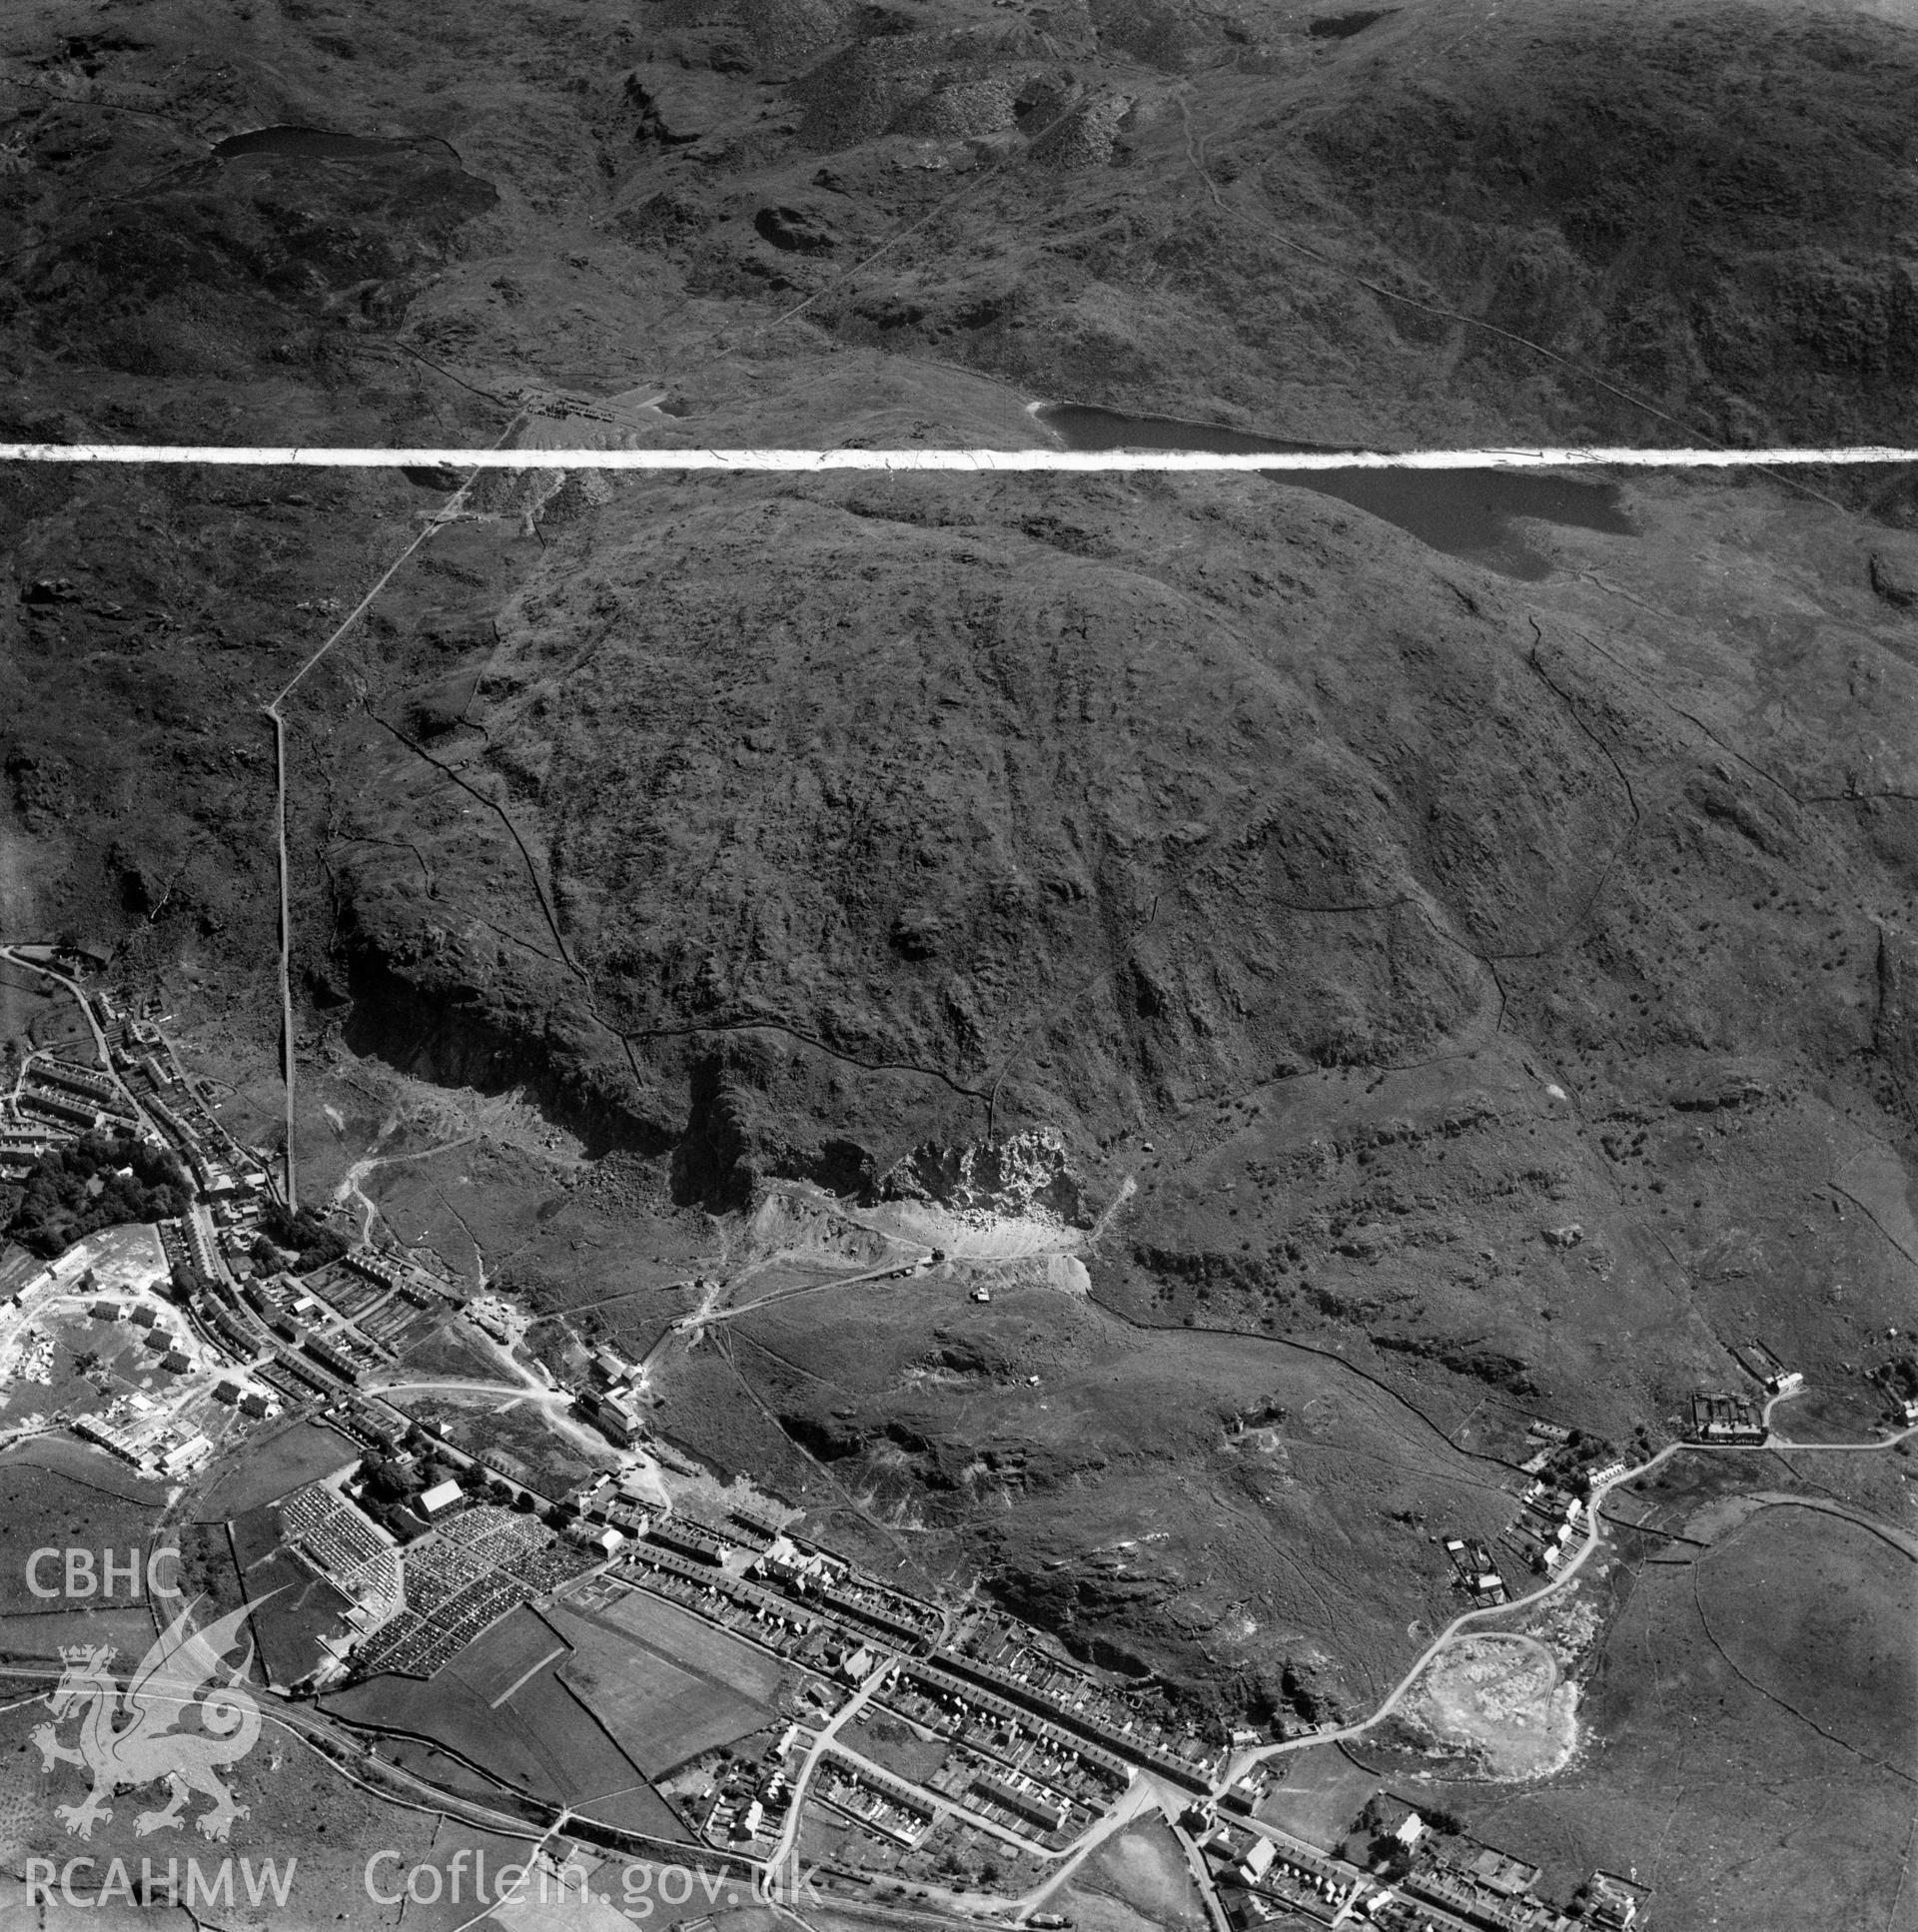 View of Madoc quarry, Blaenau Ffestiniog, commissioned by Cawood Wharton & Co. Ltd.. Oblique aerial photograph, 5?" cut roll film.